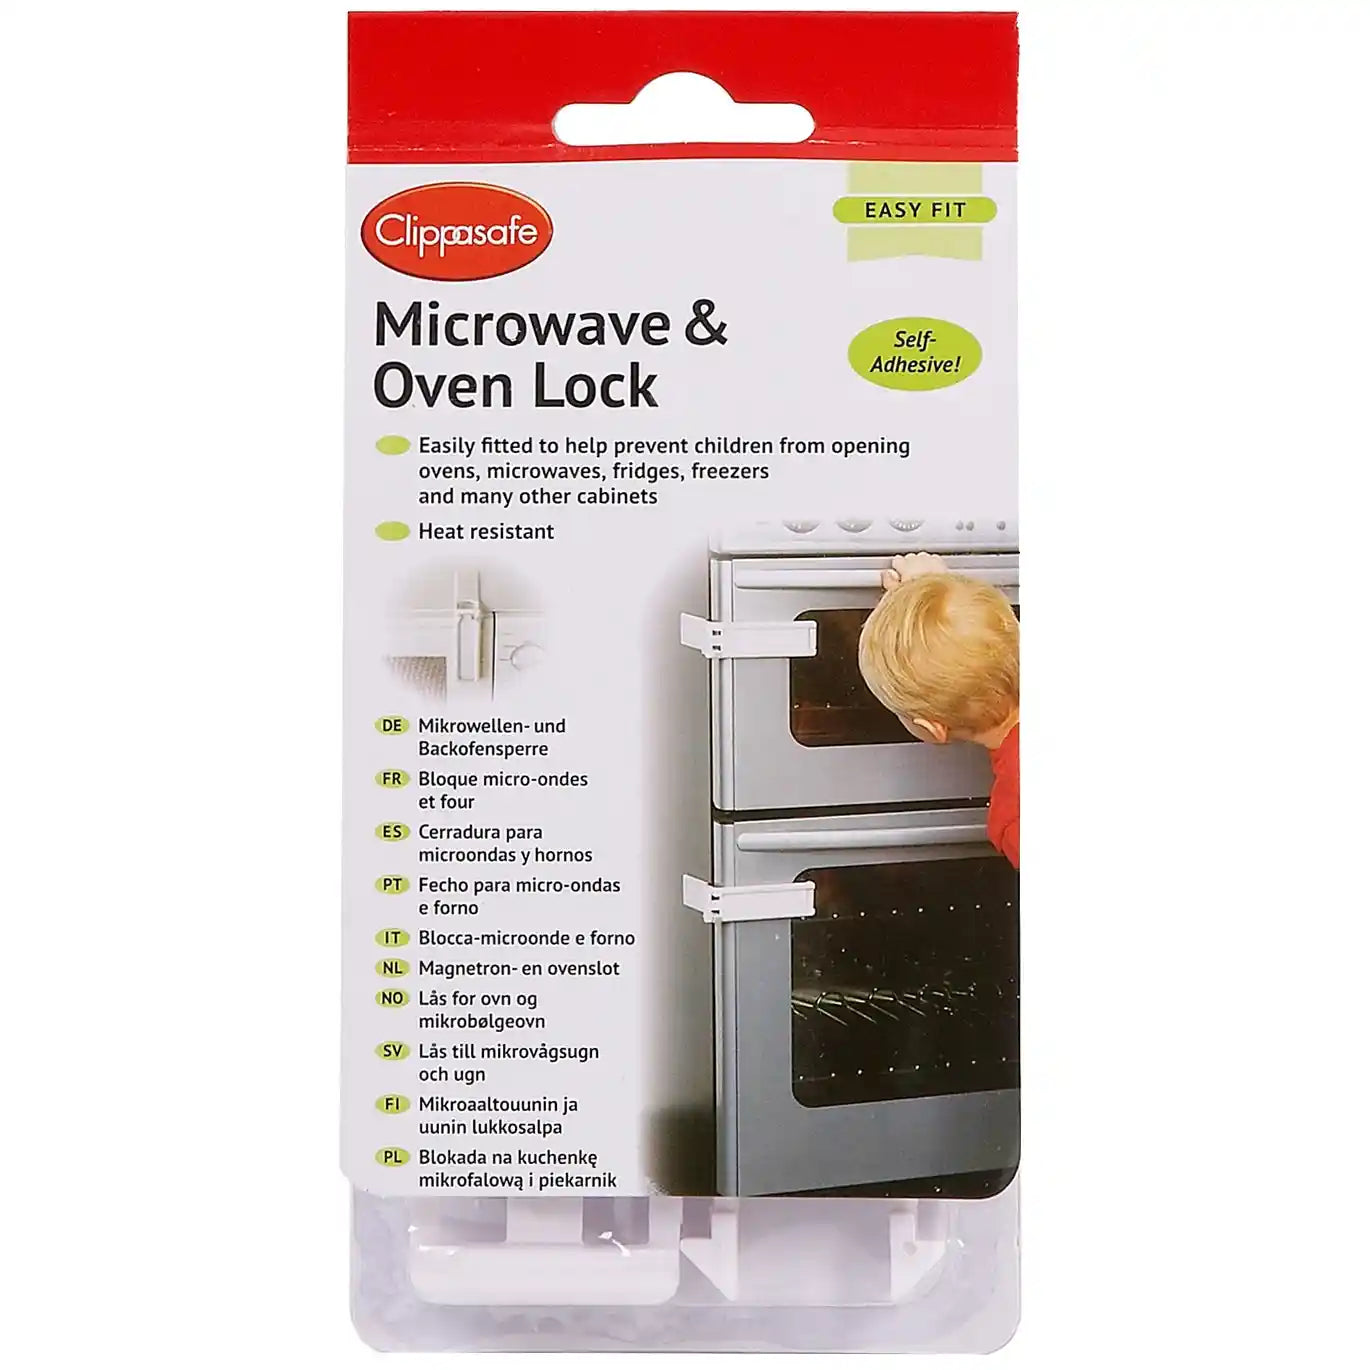 Clippasafe Microwave & Oven Lock